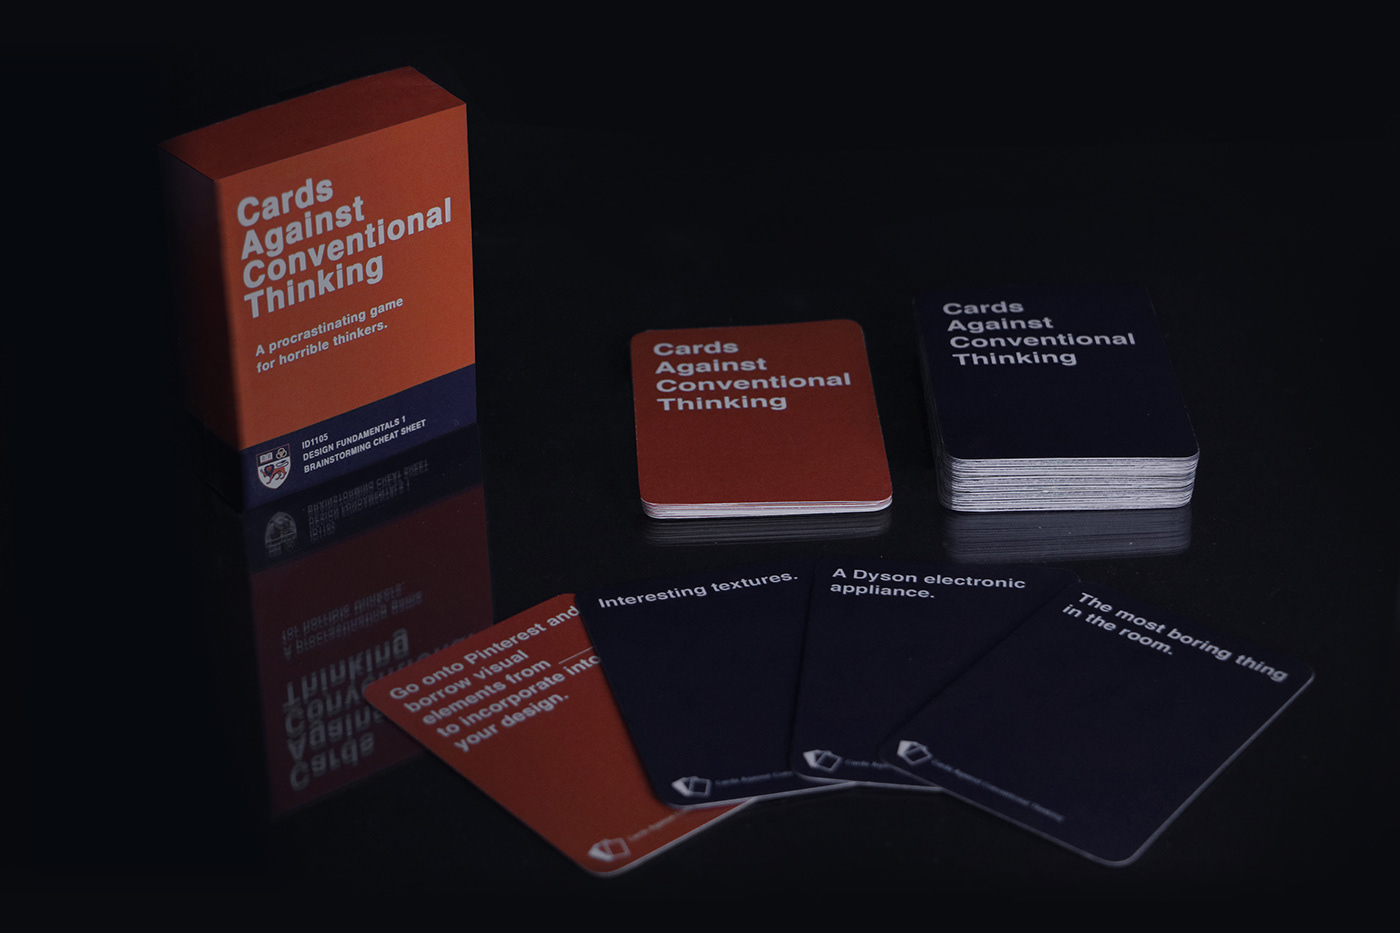 brainstorming cards Cards Against Humanity Packaging Parody